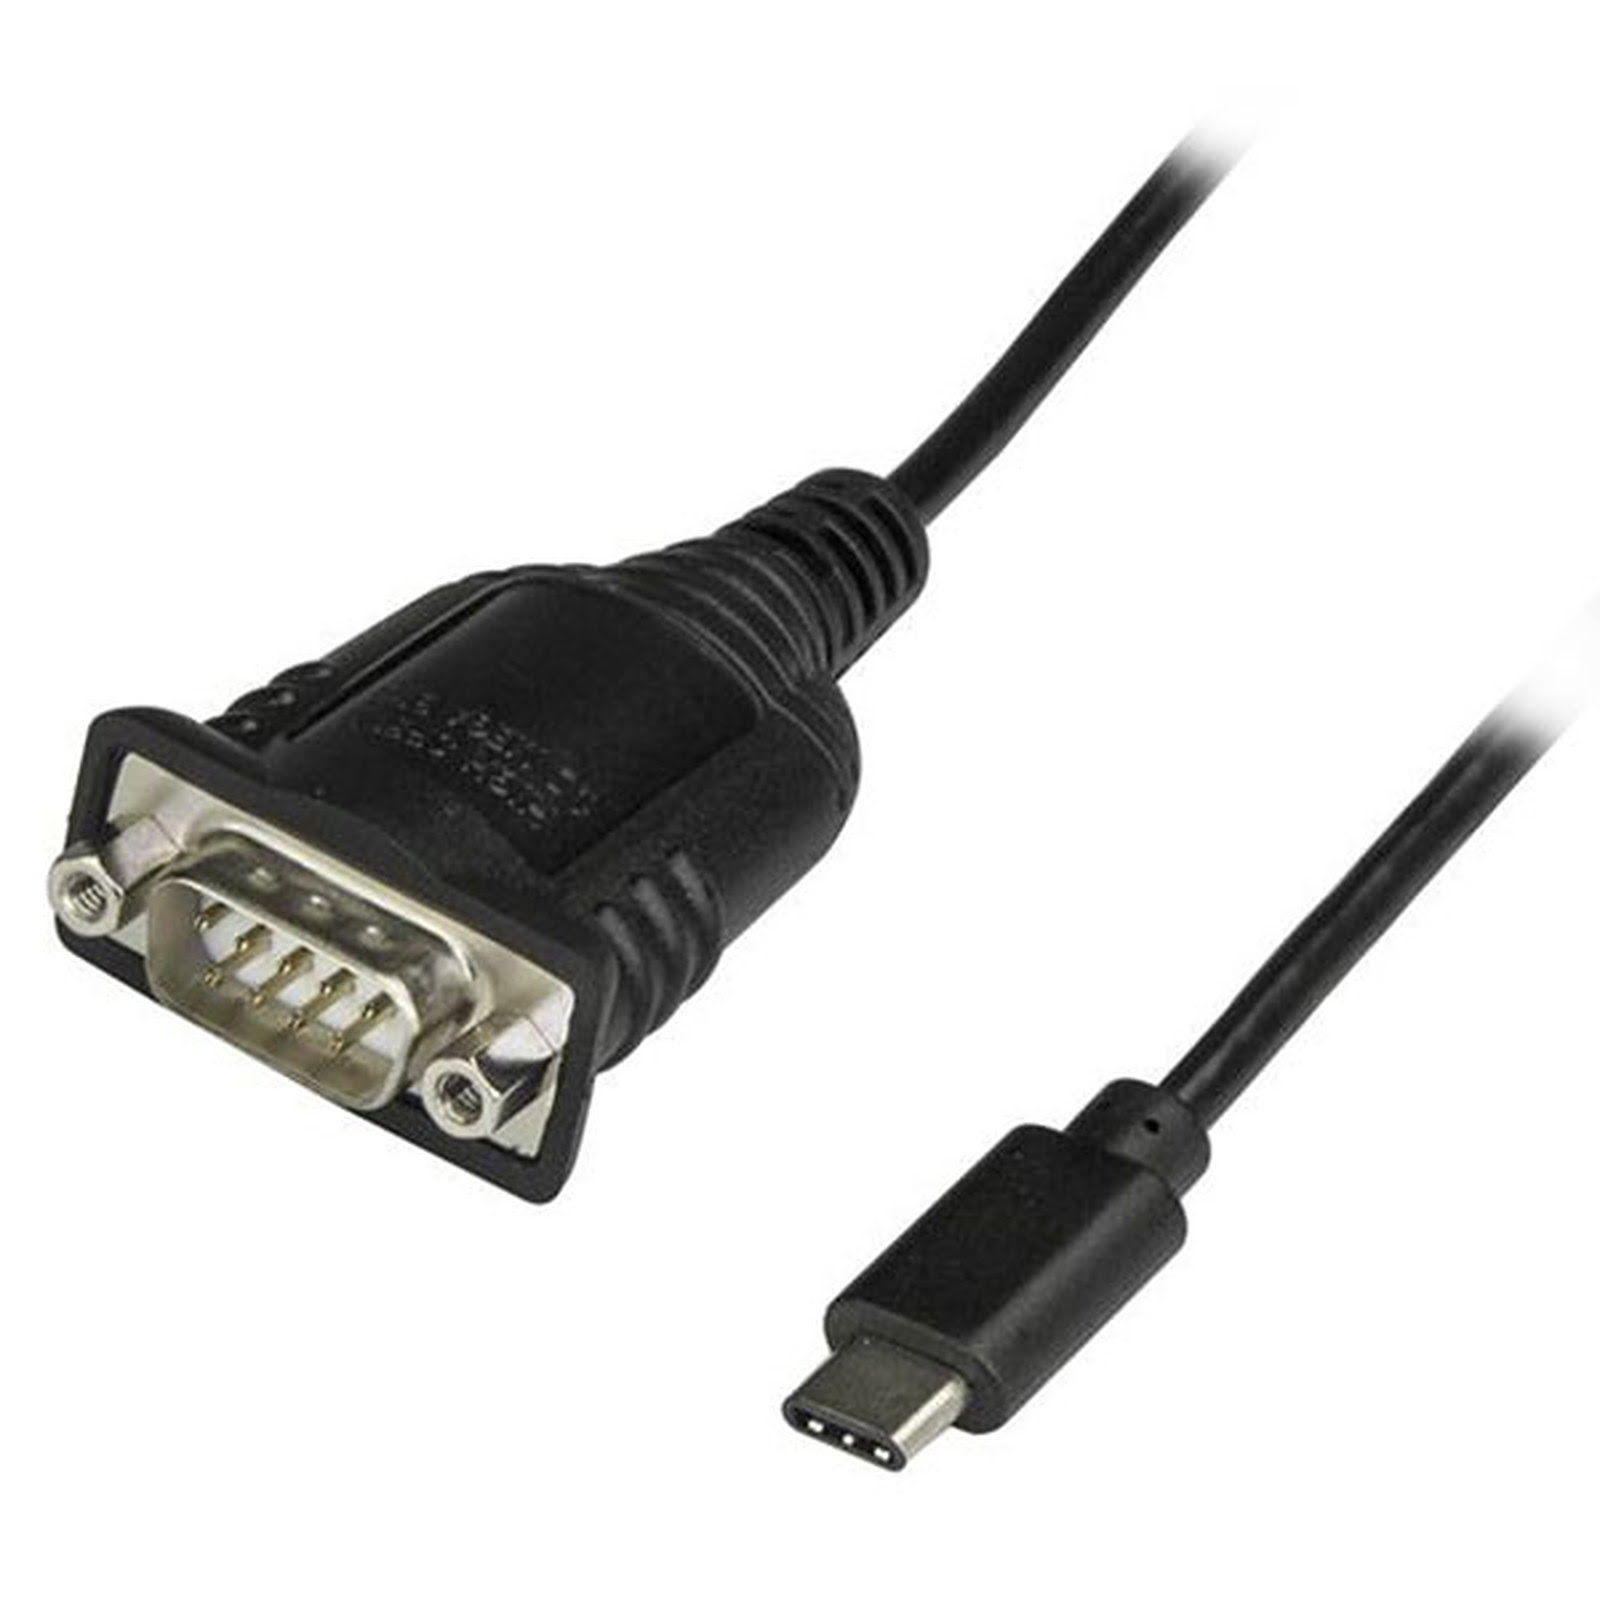 USB-C vers Port Serie DB9/RS232 - ICUSB232PROC - Connectique PC - 0